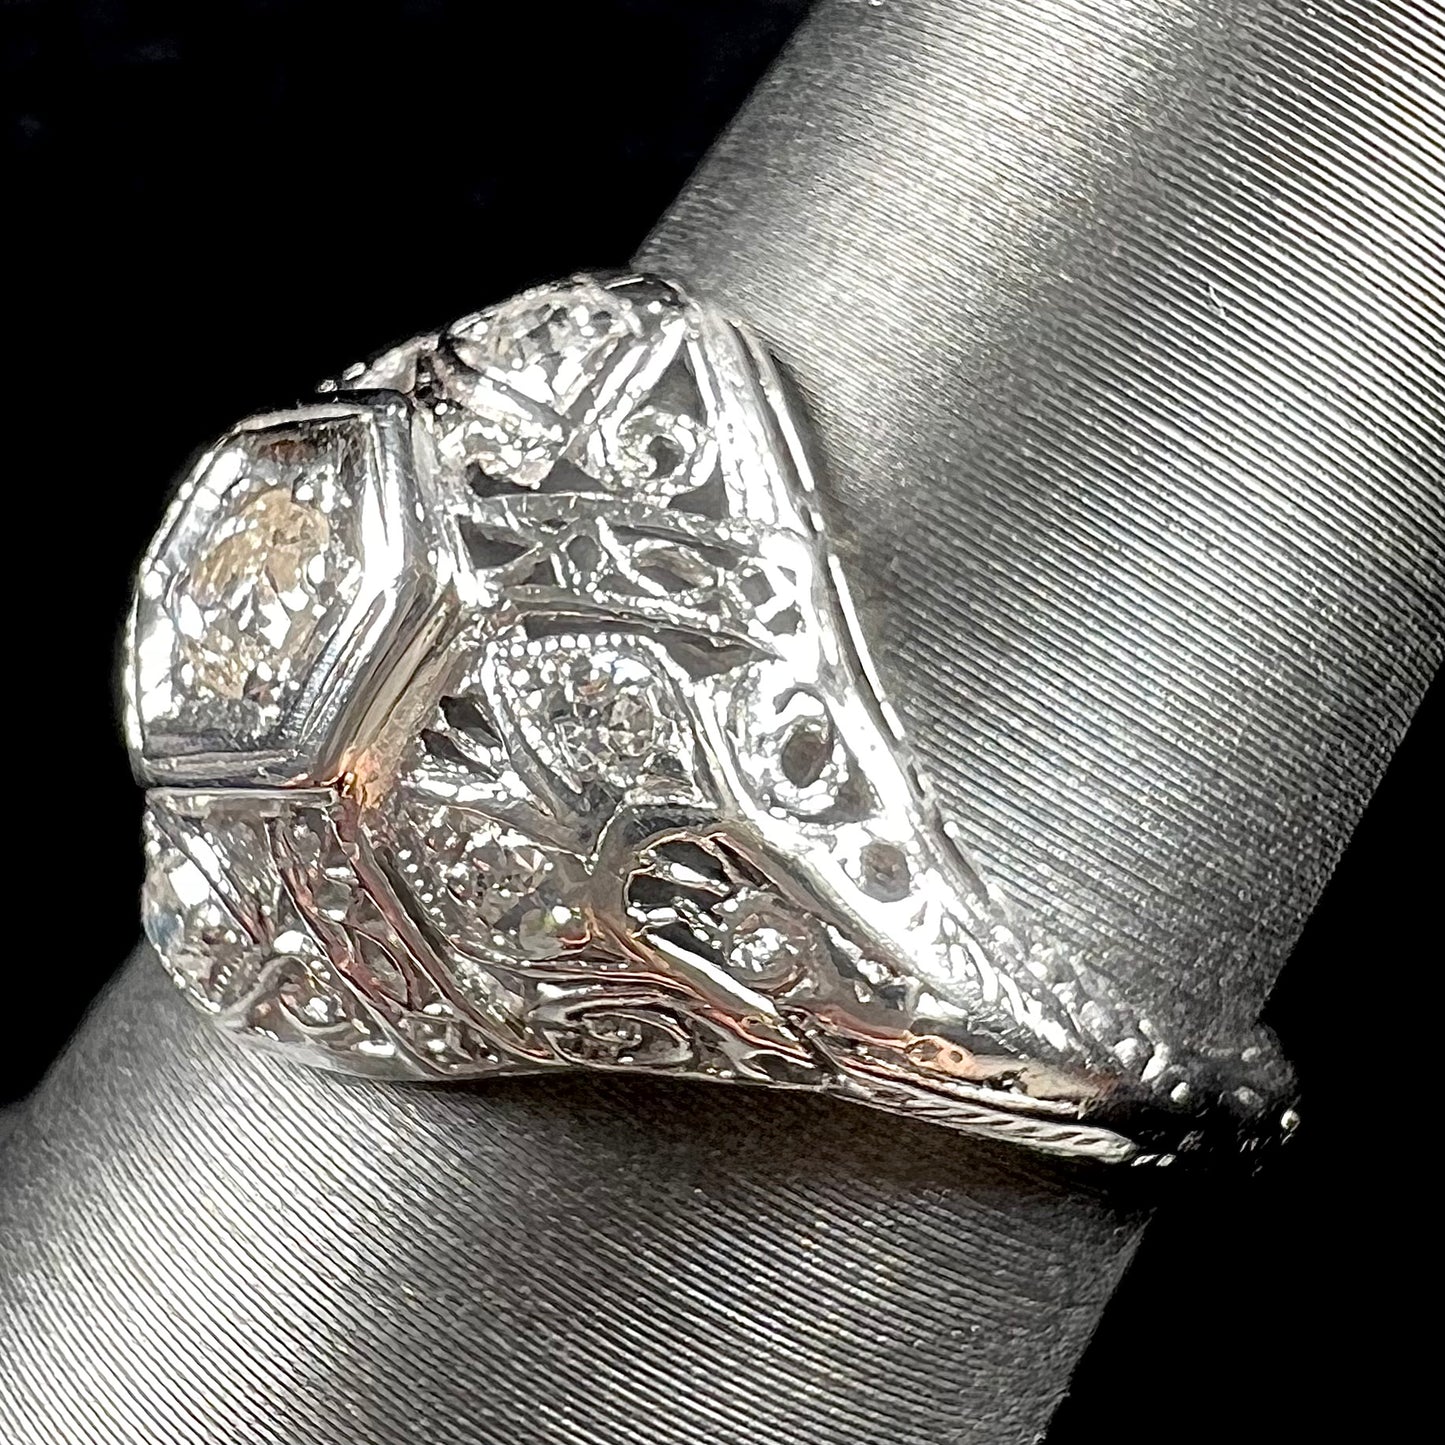 An antique ladies' platinum diamond filigree engagement ring.  The center stone is an old European cut diamond.